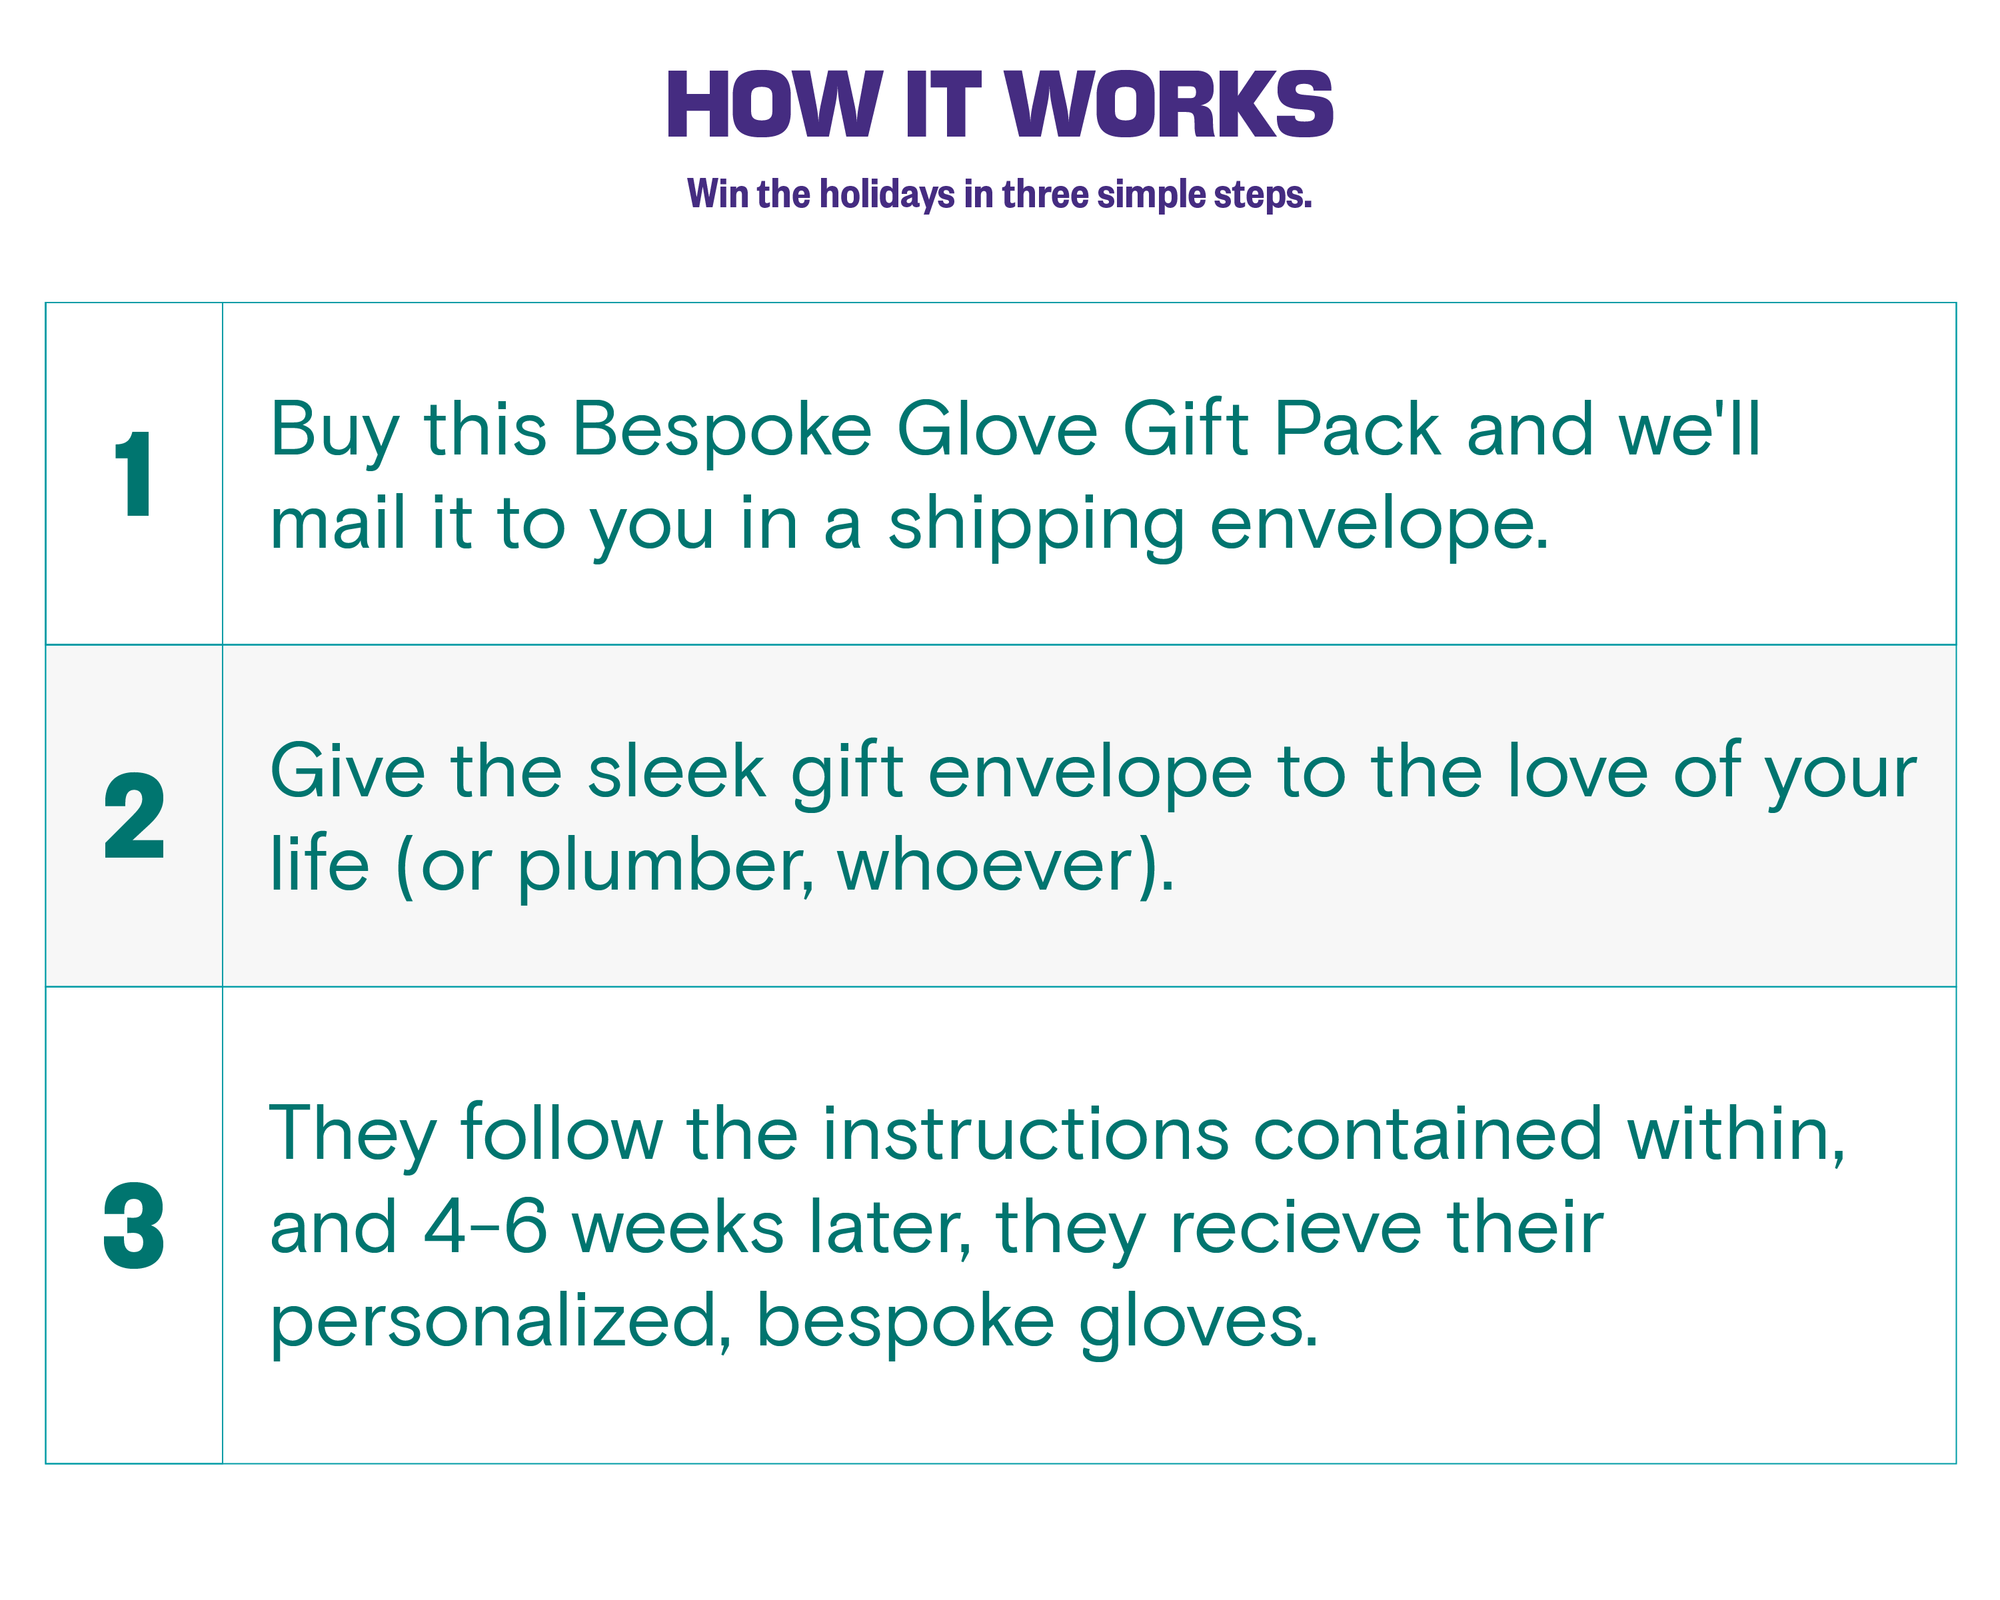 Bespoke Glove Gift Pack